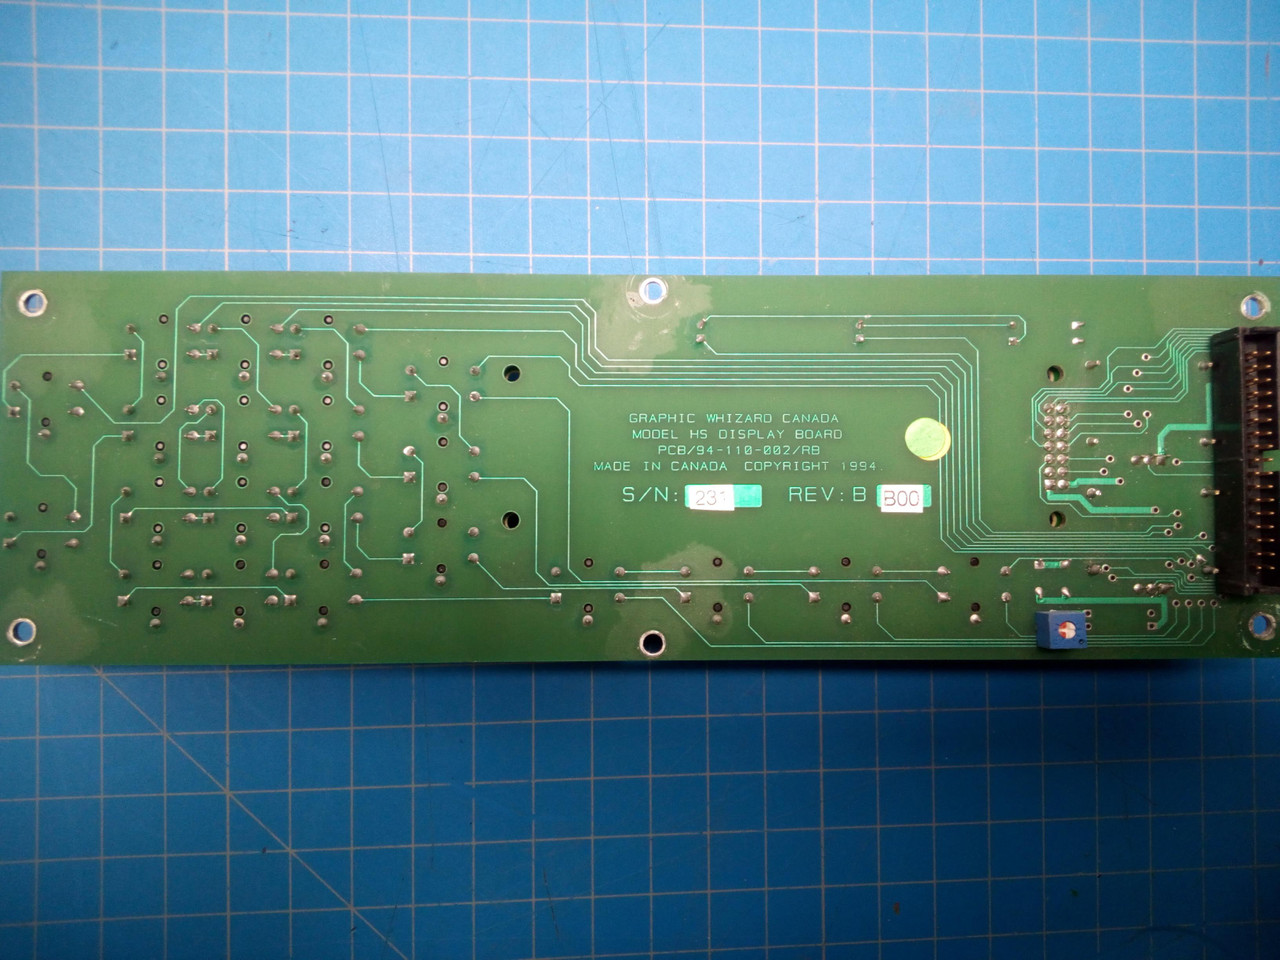 Graphic Whizard model K-2 Control Circuit Board P02-000859